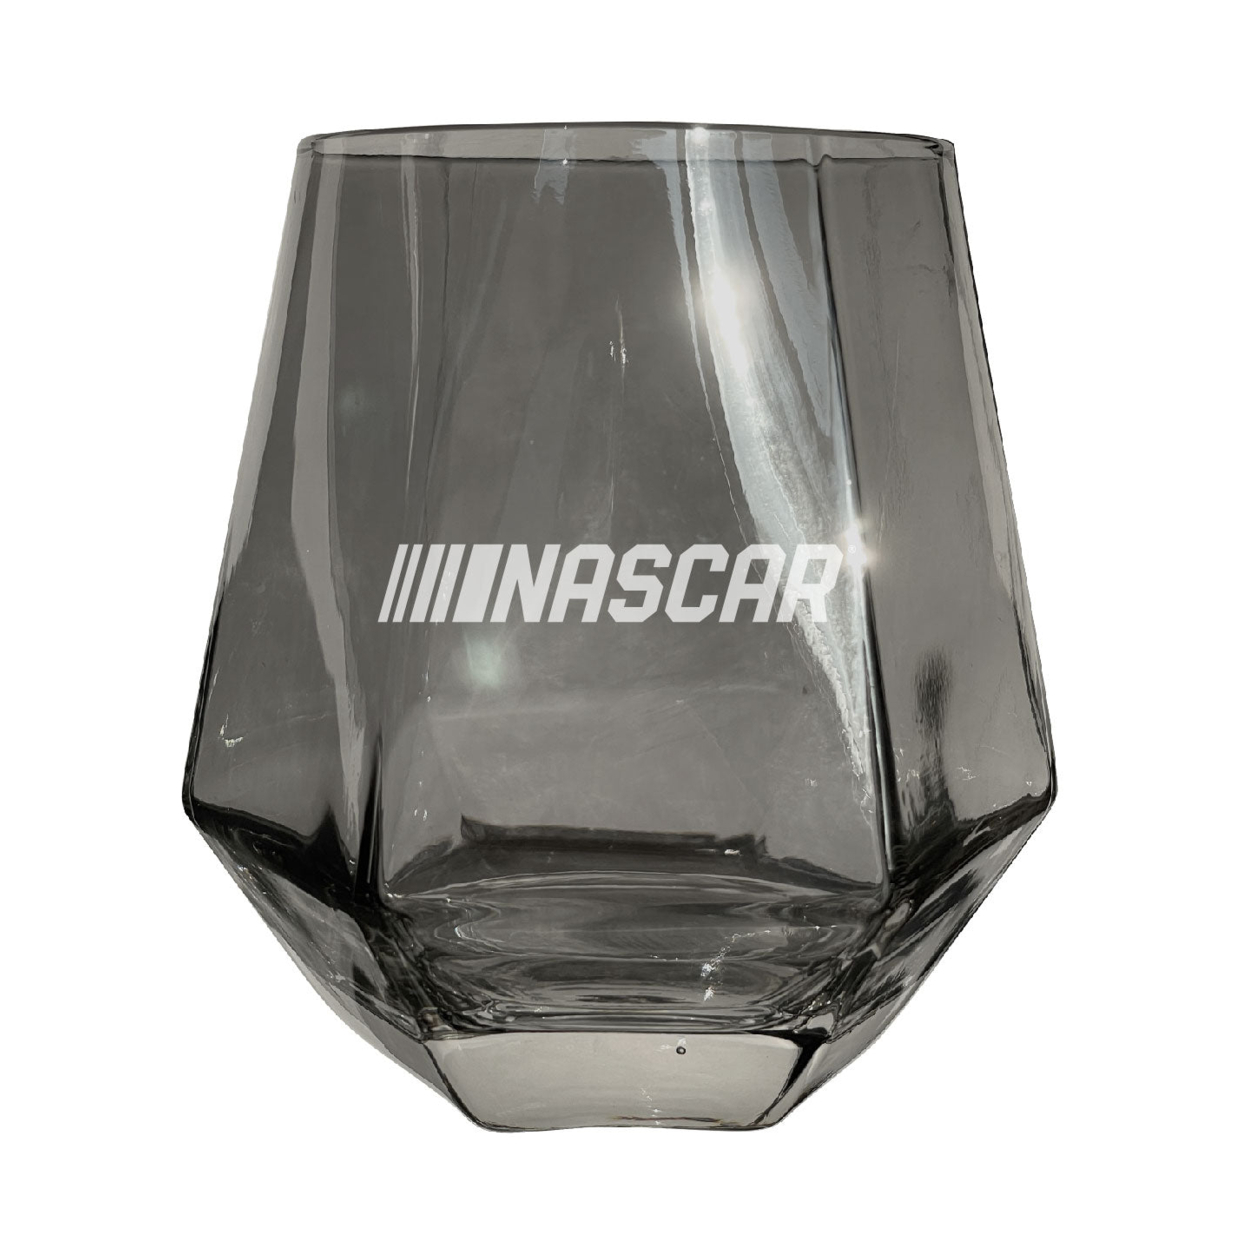 NASCAR Officially Licensed 10 Oz Engraved Diamond Wine Glass - Grey, Single